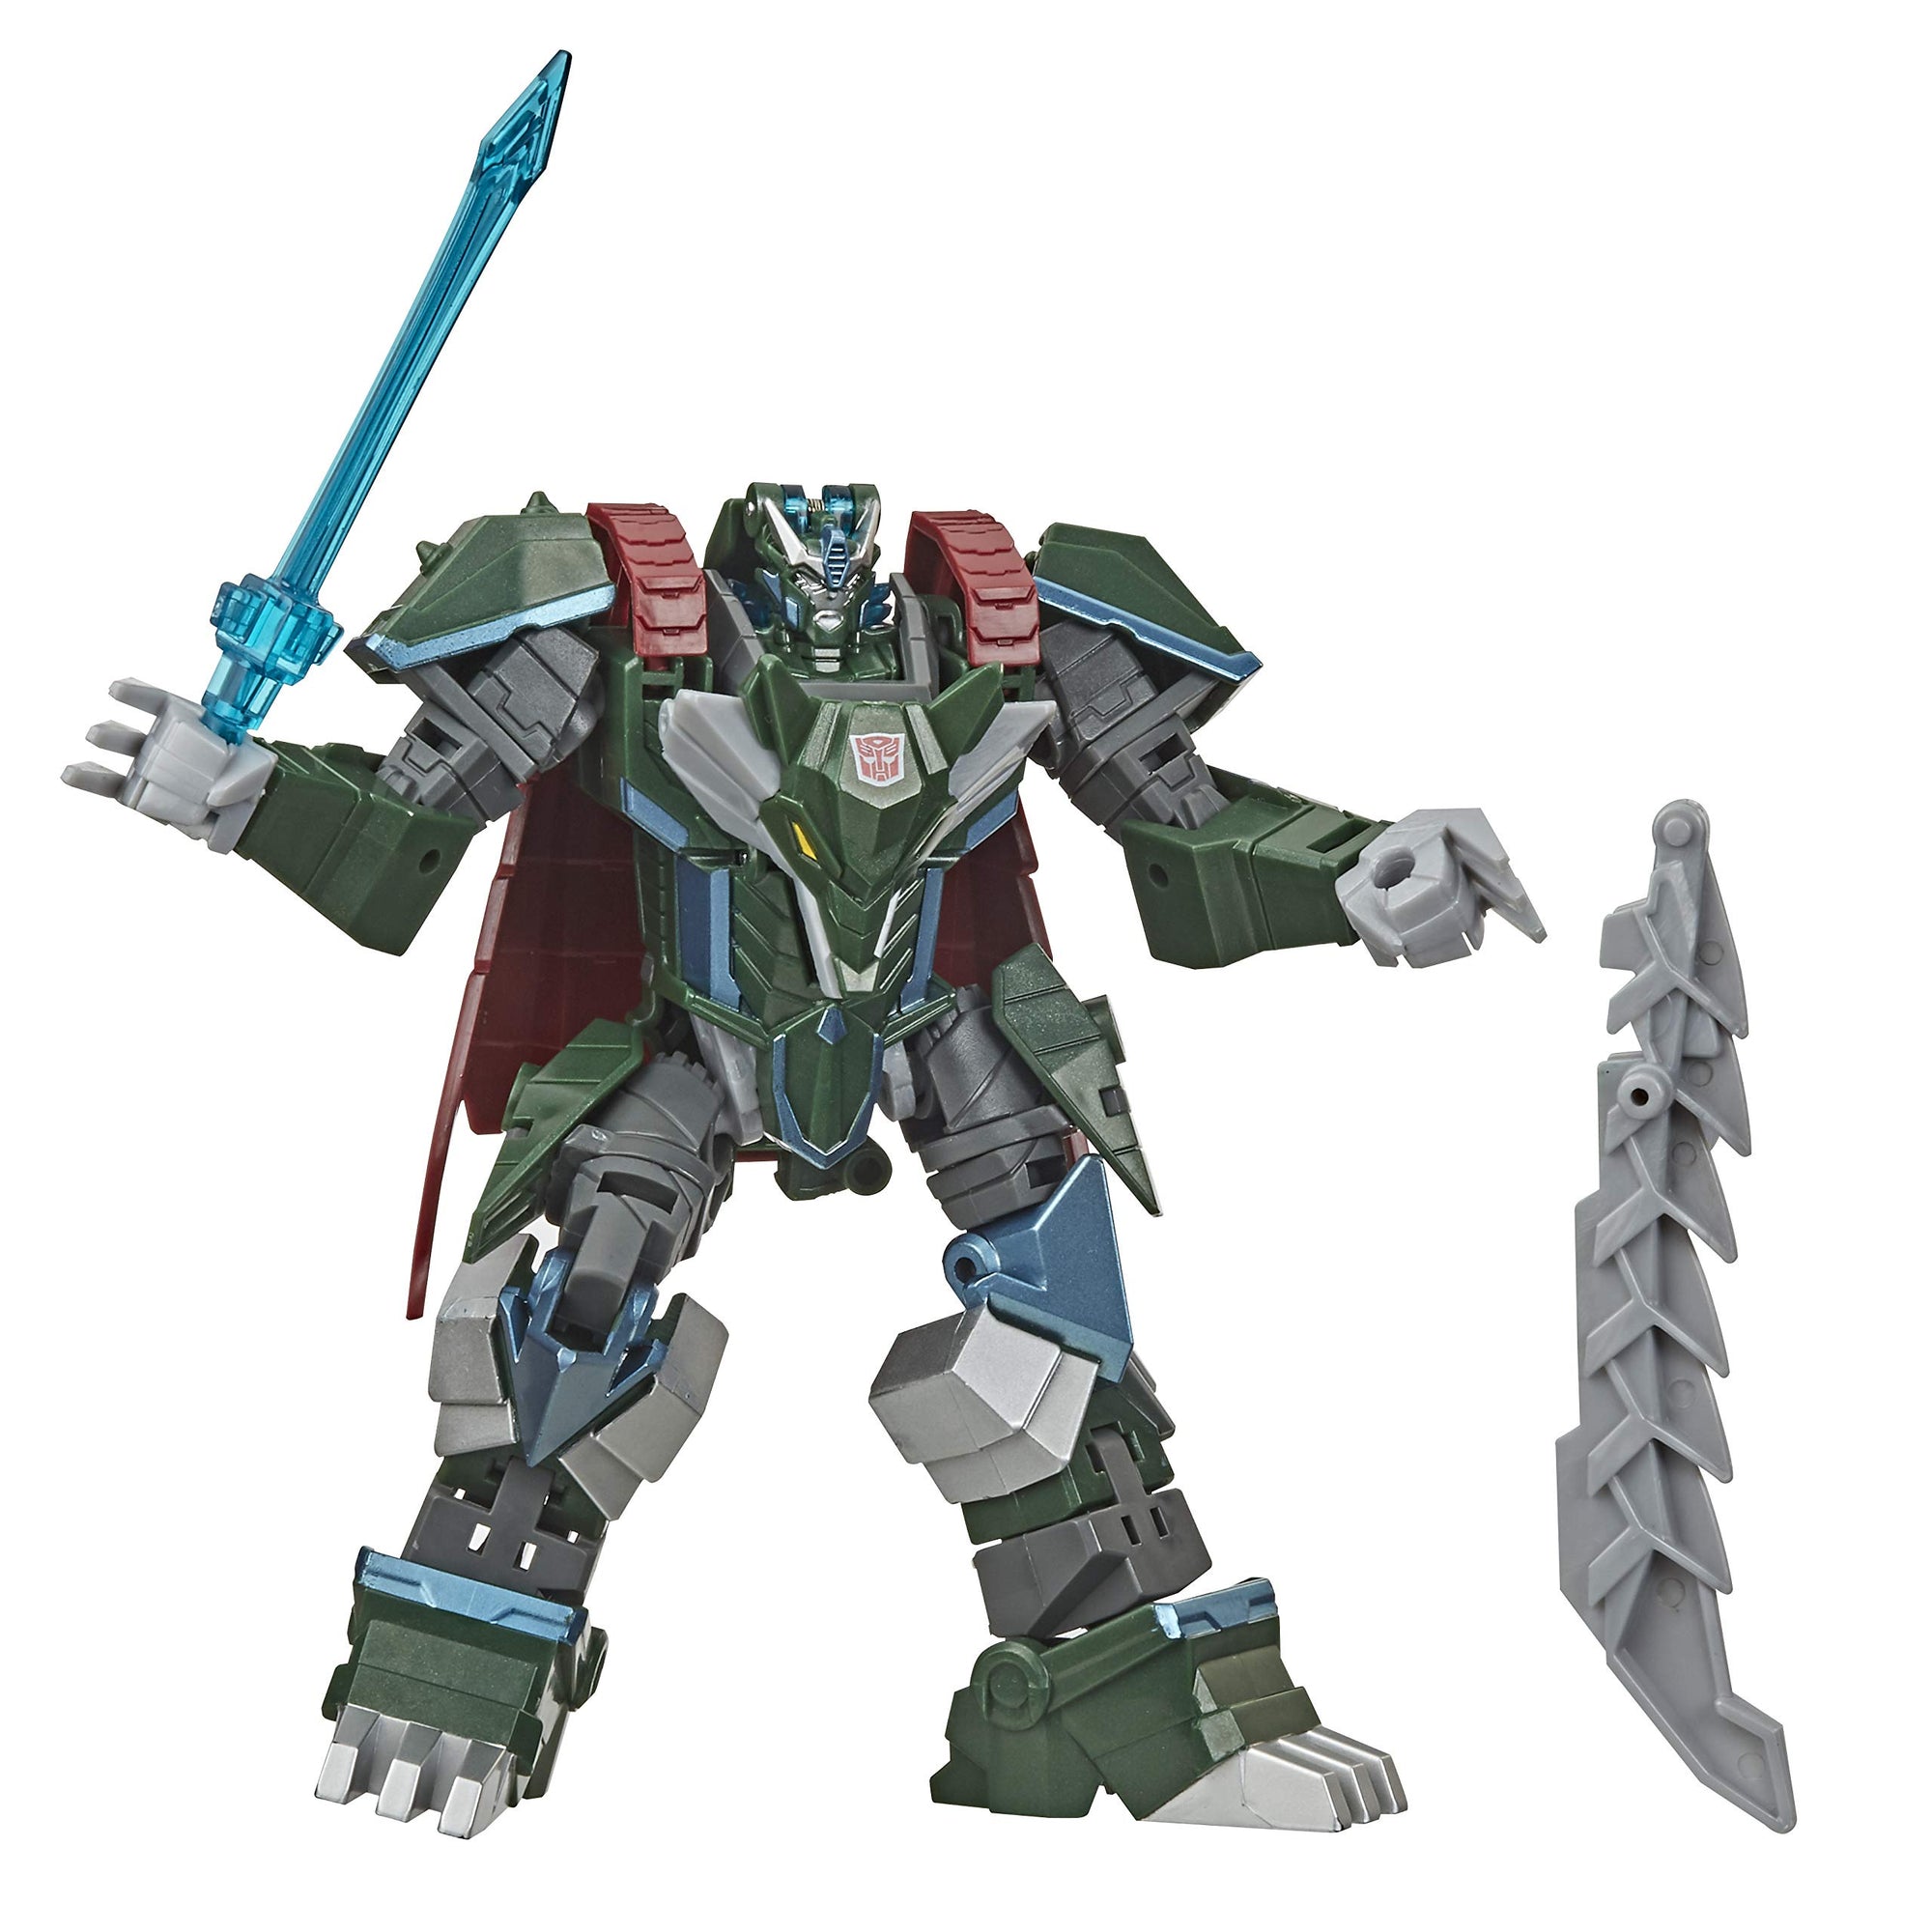 Transformers Cyberverse Adventures Energon Armour Thunderhowl